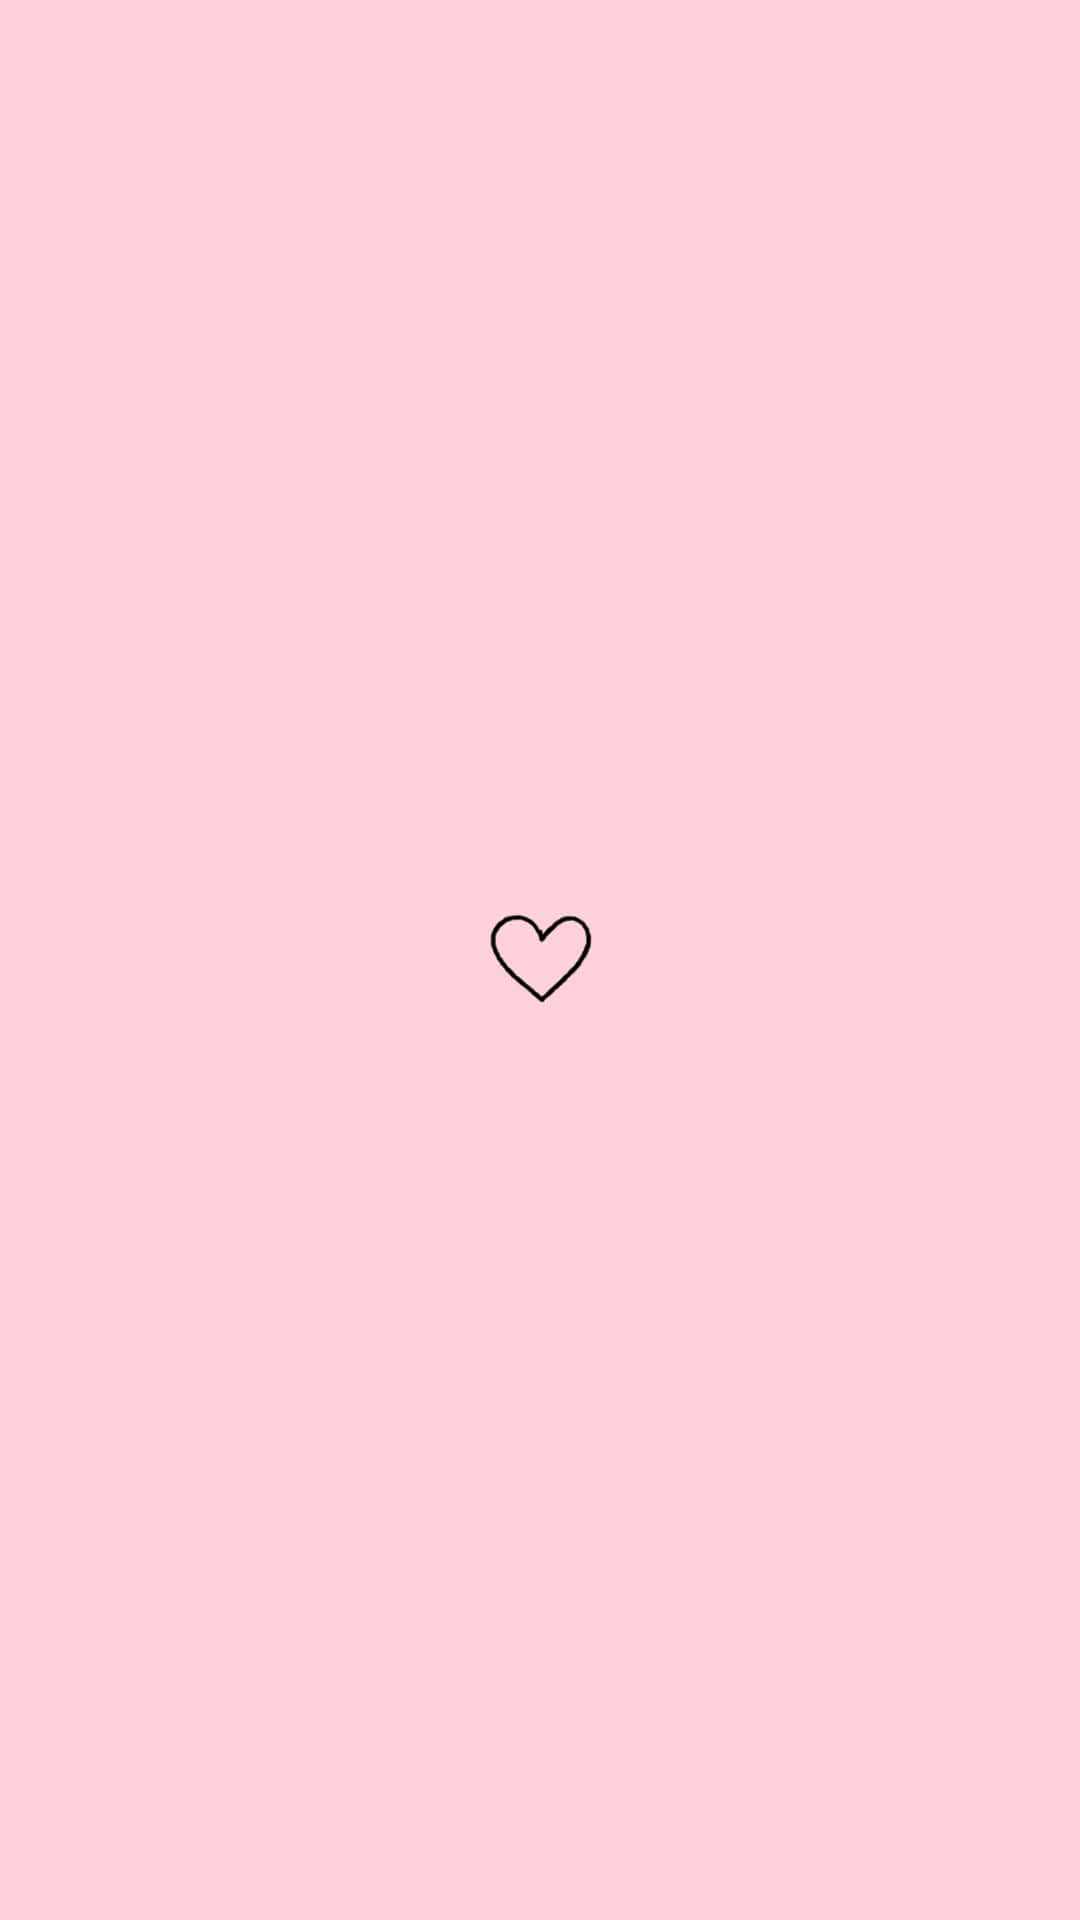 Aesthetic Instagram Minimalist Heart Background